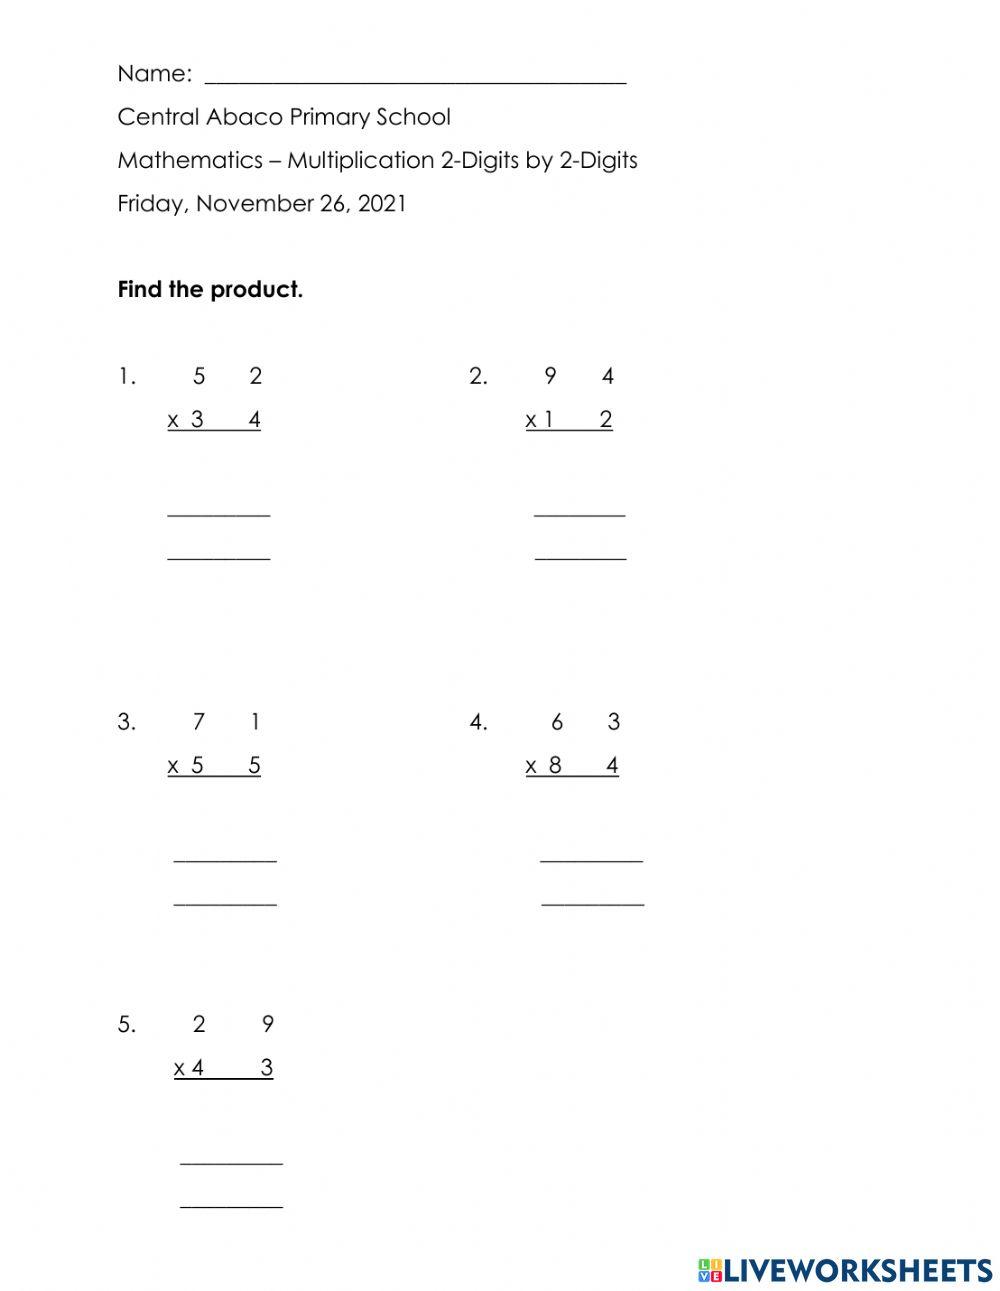 Mathematics - Multiplication of 2 Digits by 2 Digits